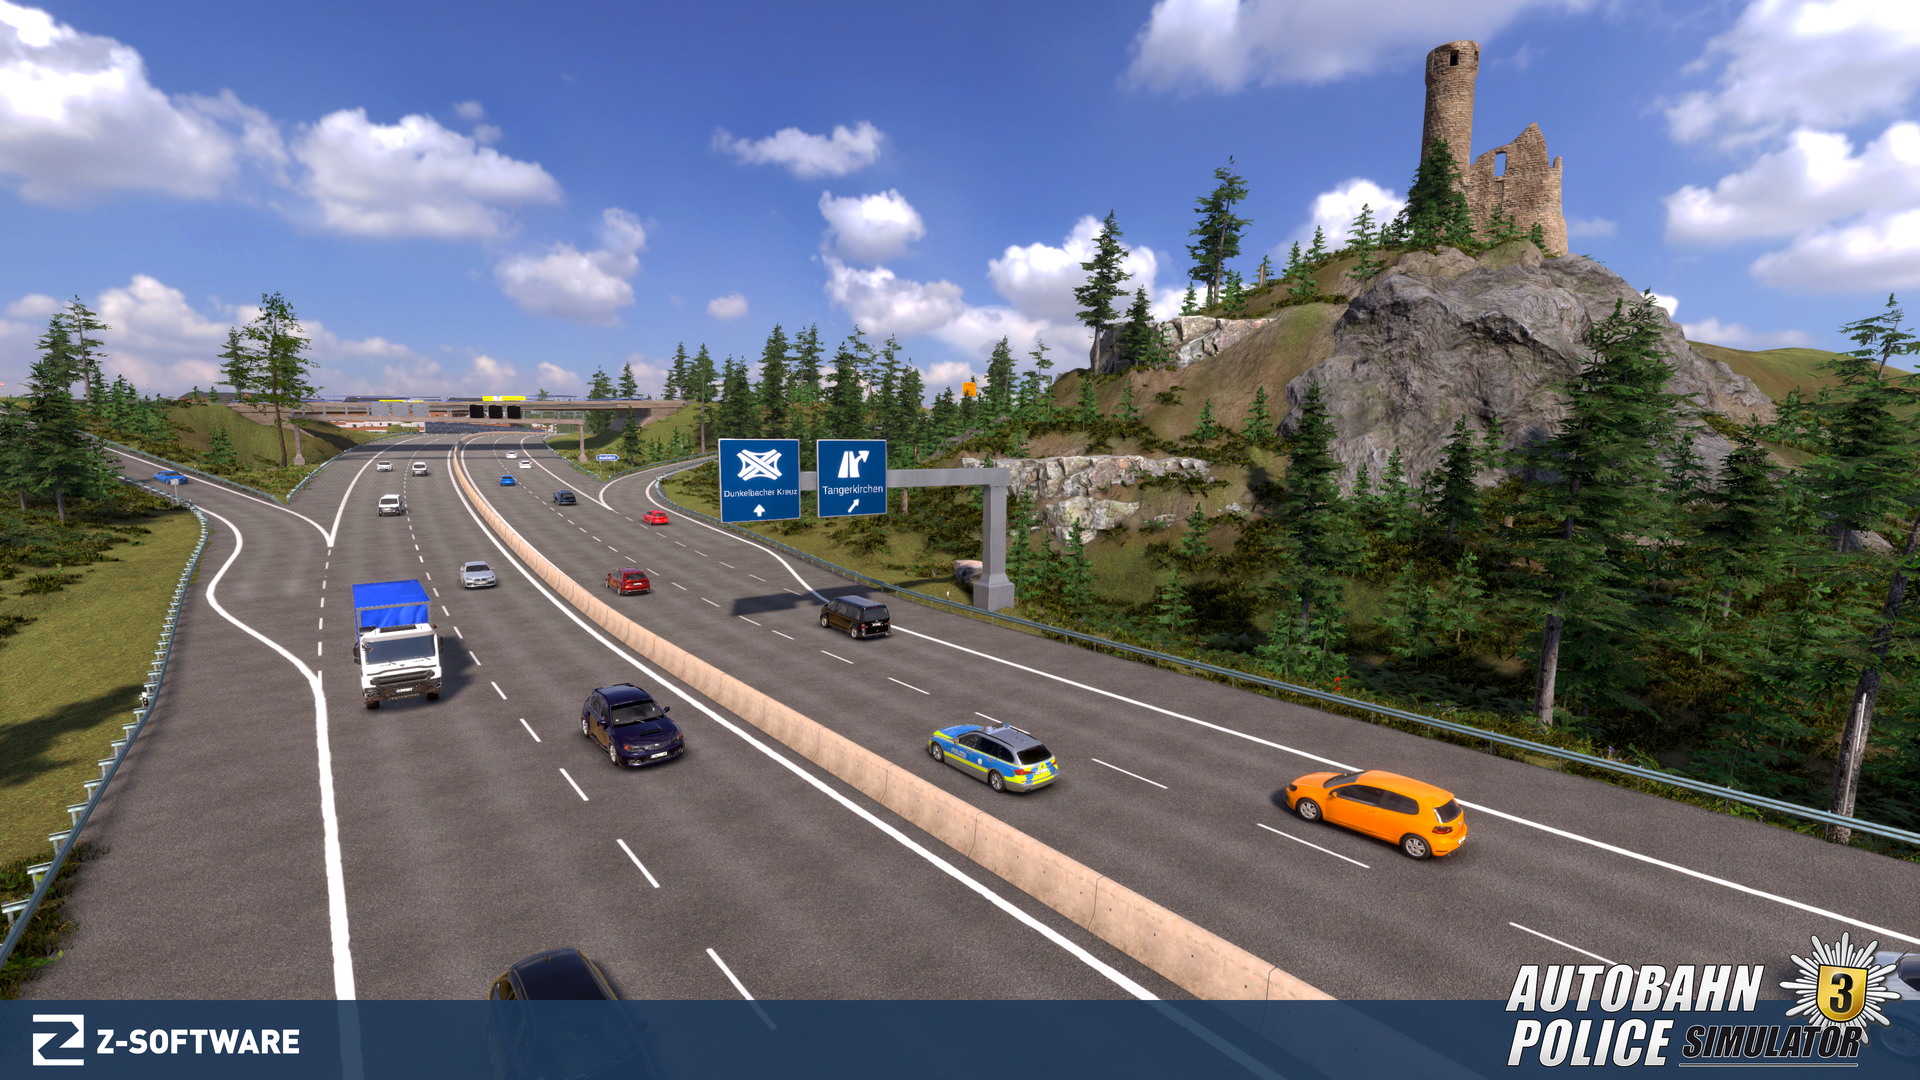 Autobahn Police Simulator 3 - screenshot 12